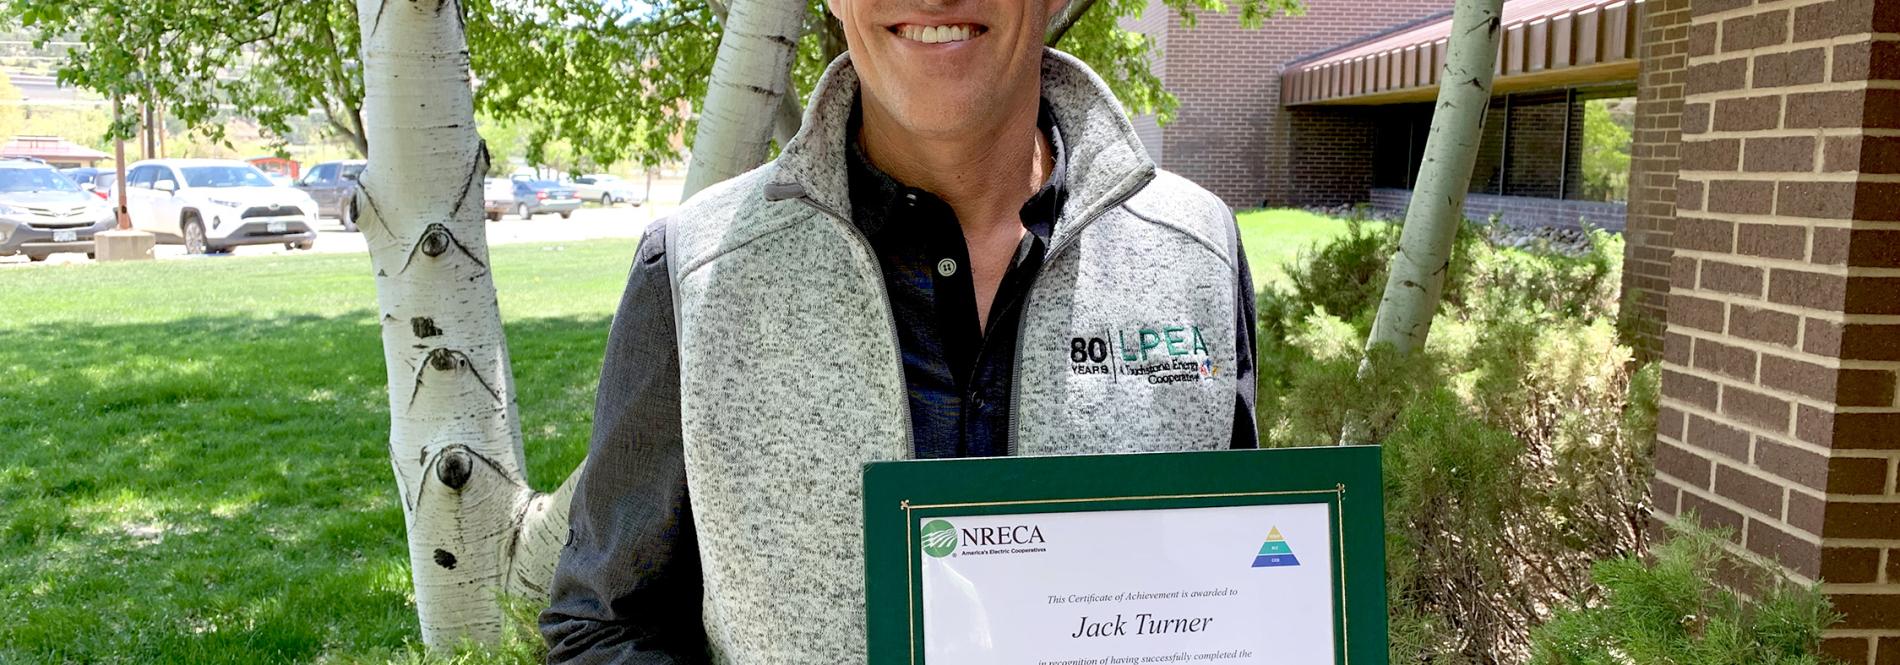 LPEA Director Jack Turner earns industry credentials from NRECA